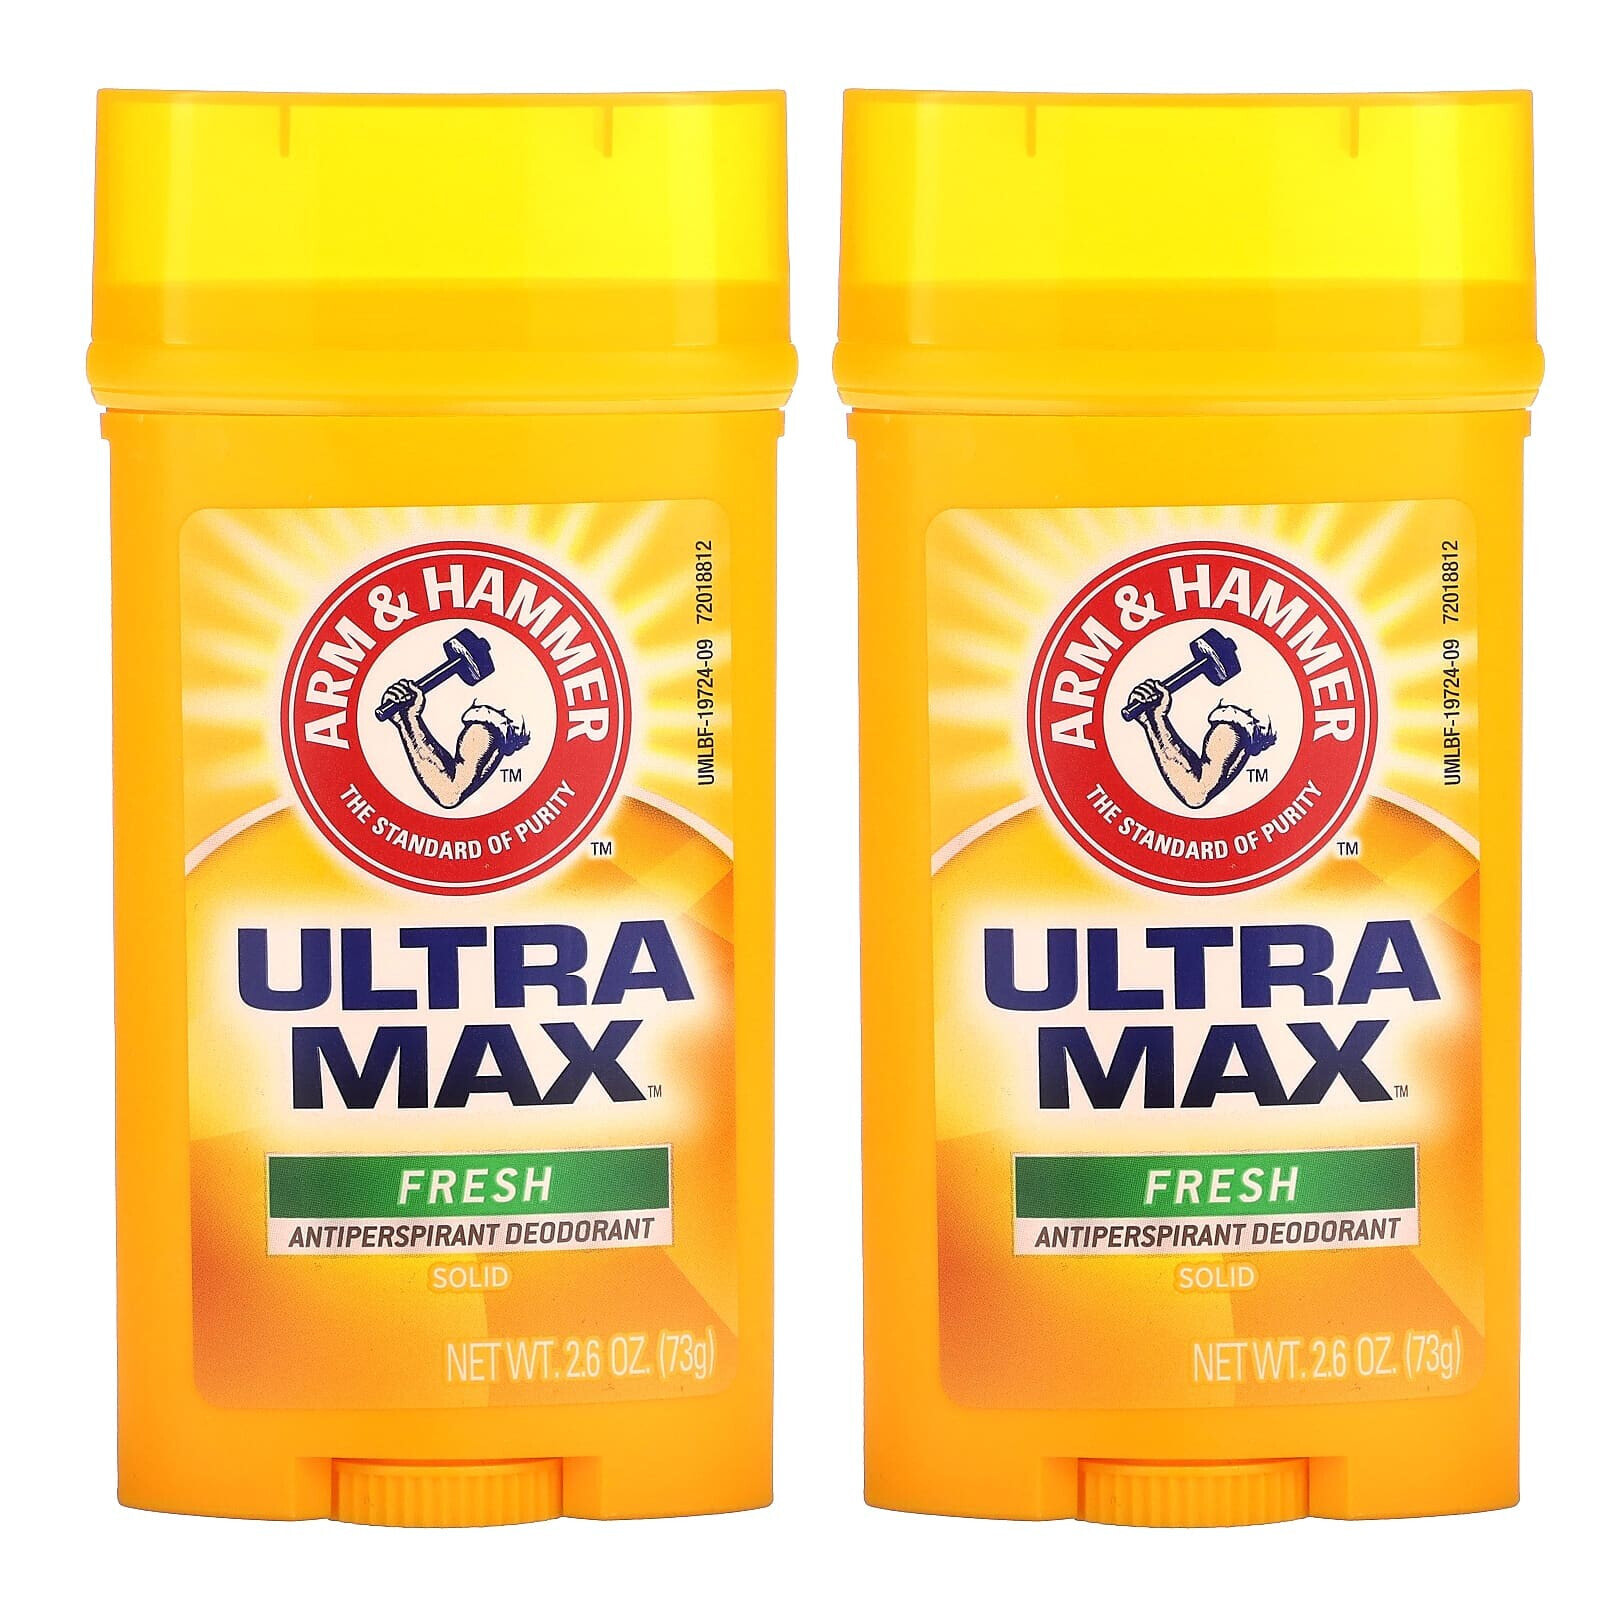 UltraMax, Solid Antiperspirant Deodorant, Fresh, 2 Pack, 2.6 oz (73 g) Each